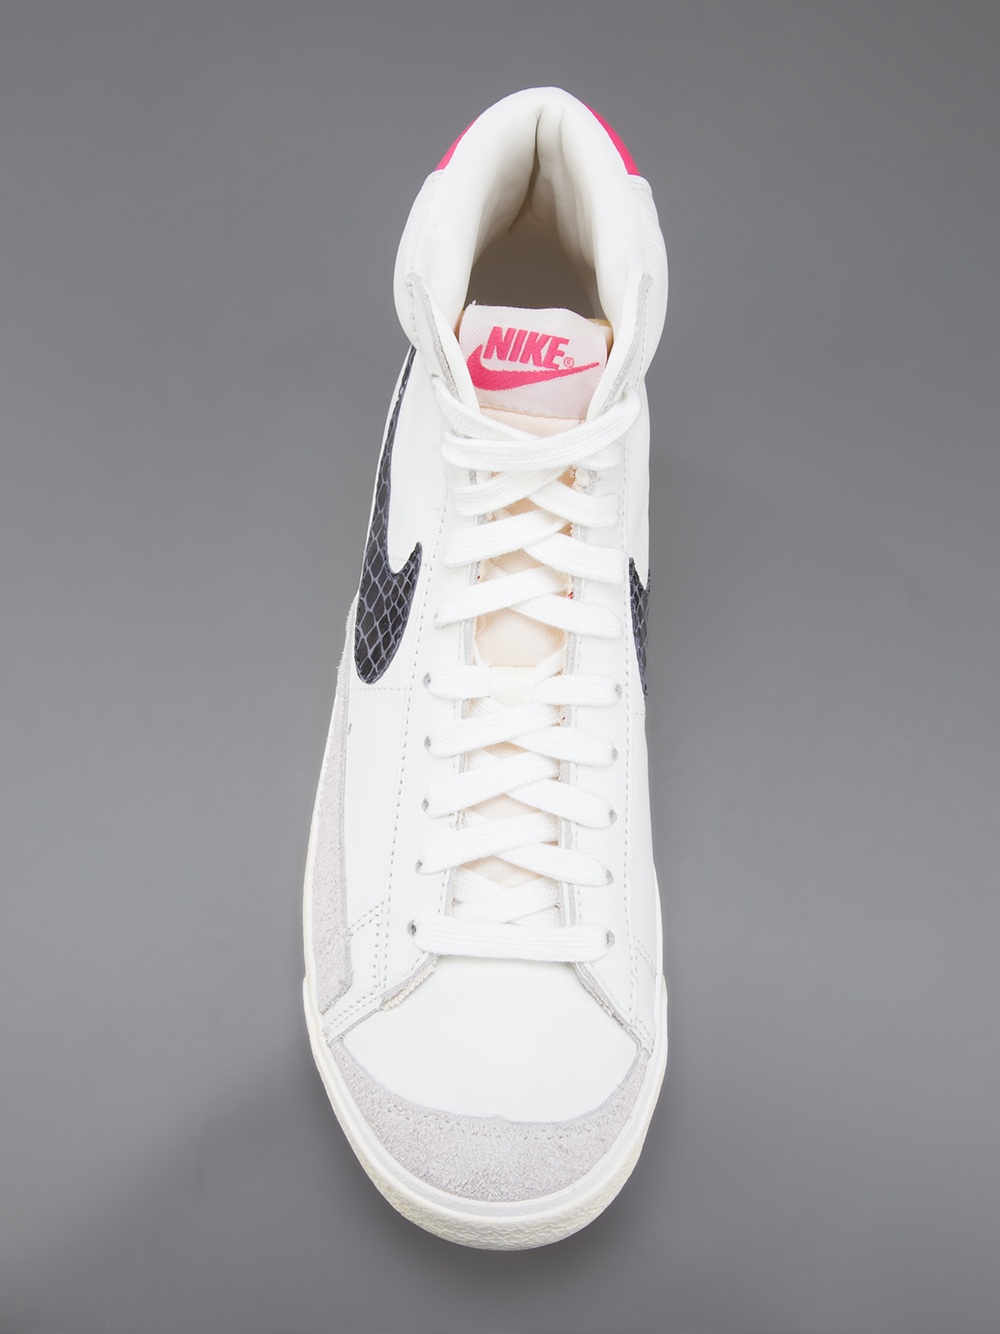 Lyst - Nike Blazer Mid 77 Hi Top Sneaker in White